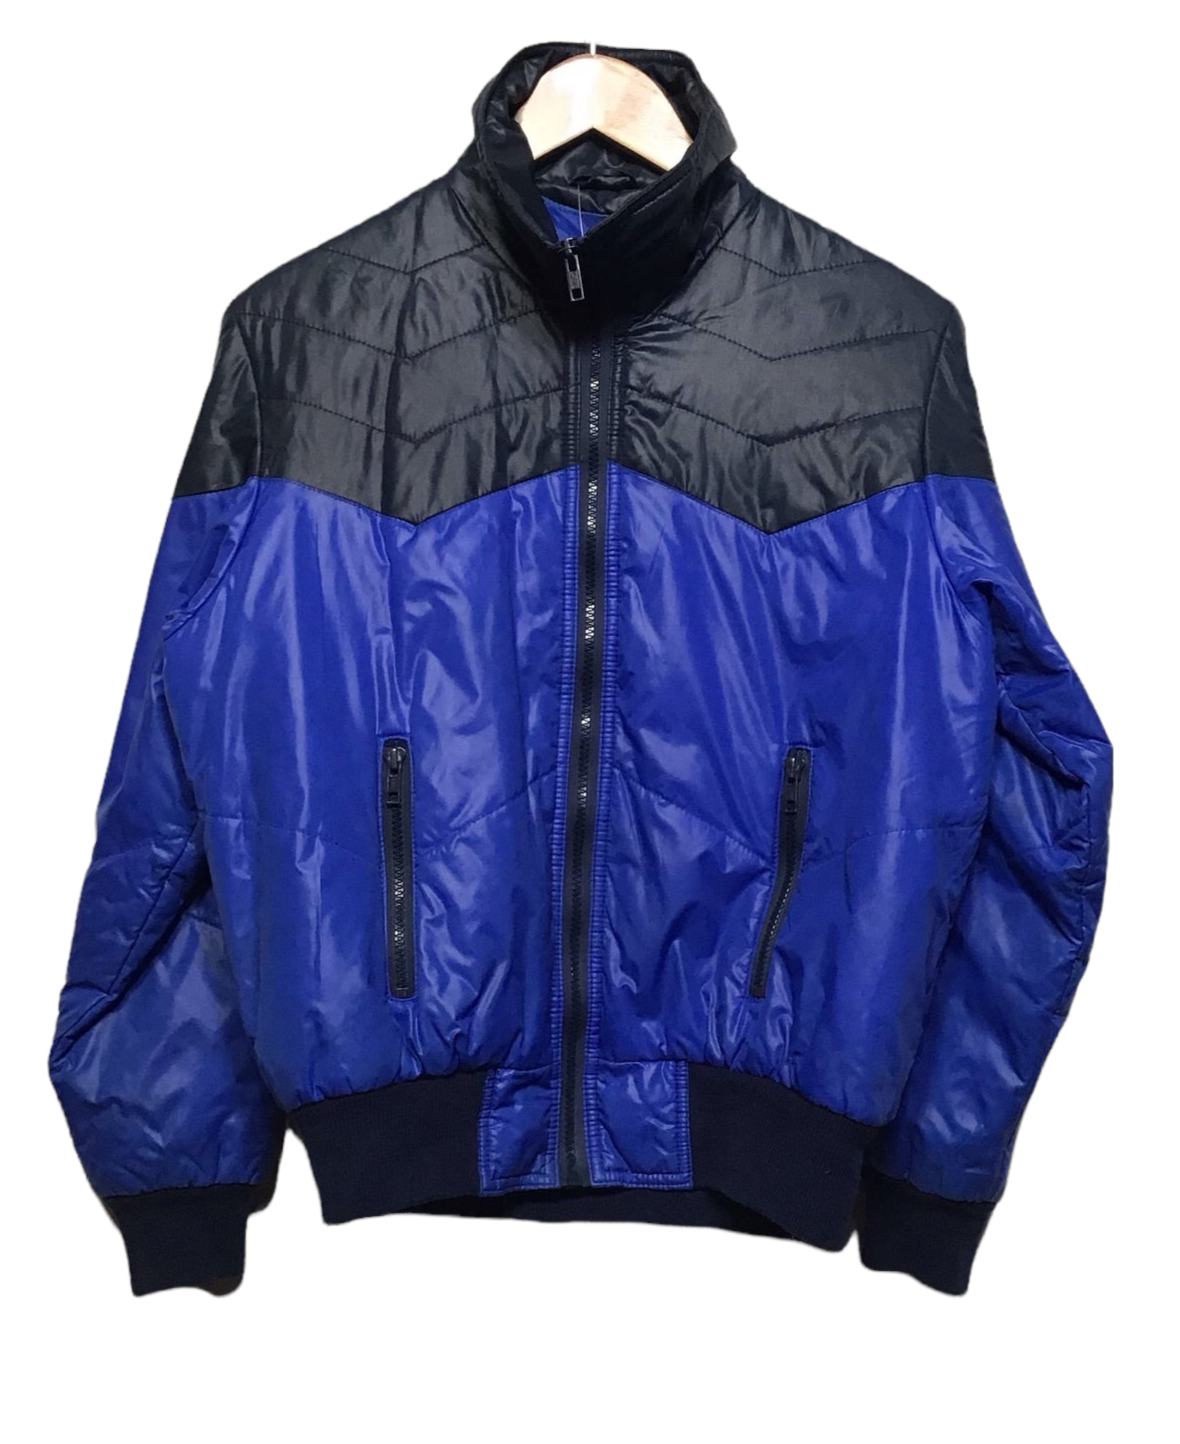 Blue Sports Jacket (Size M)